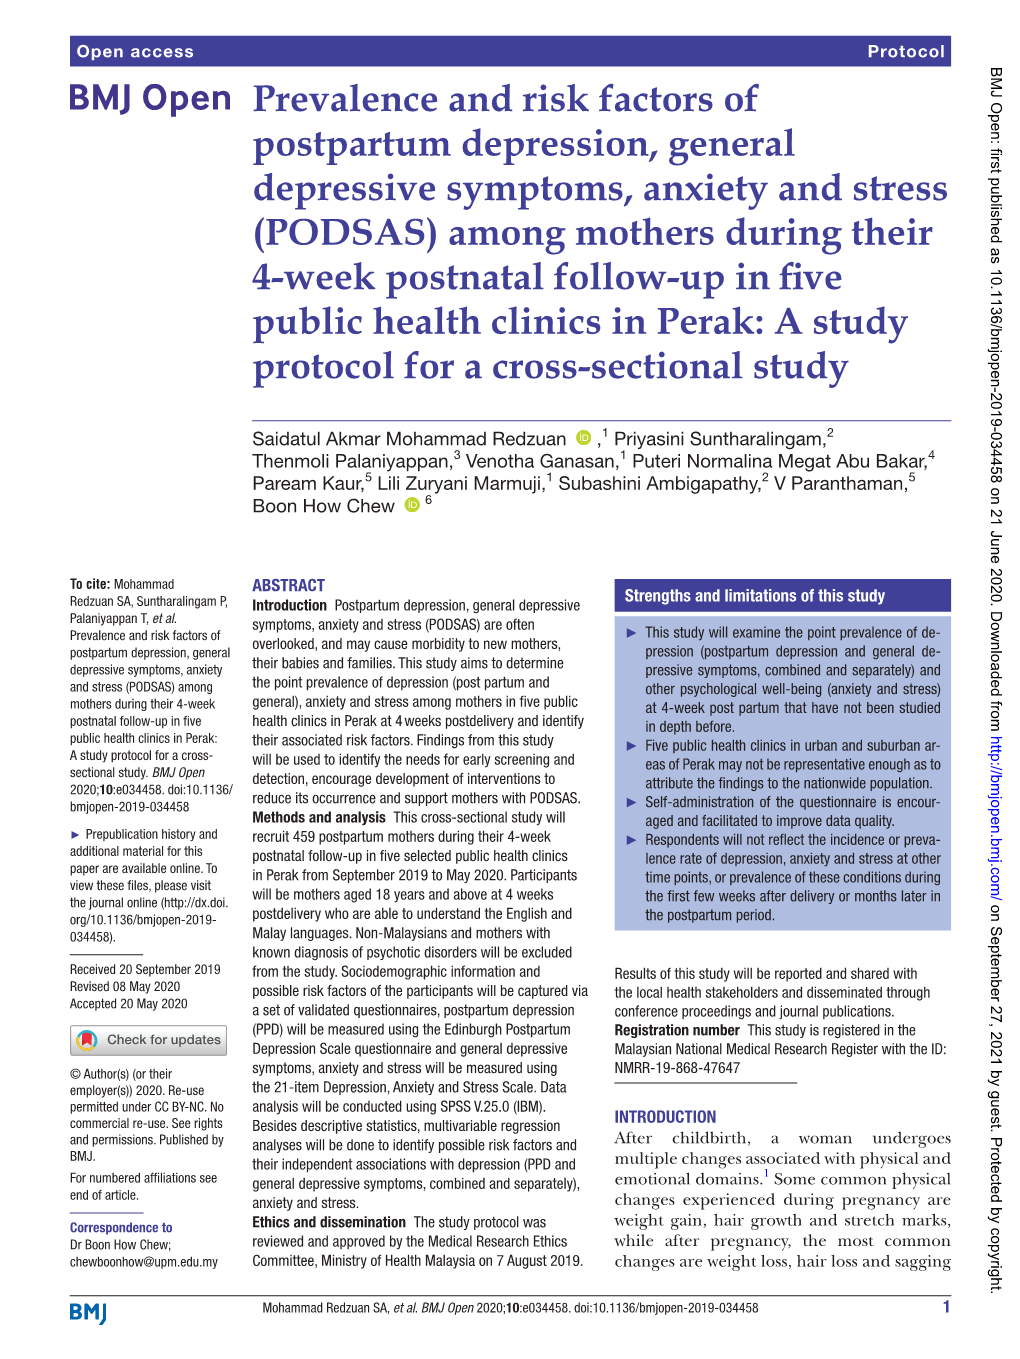 Prevalence and Risk Factors of Postpartum Depression, General